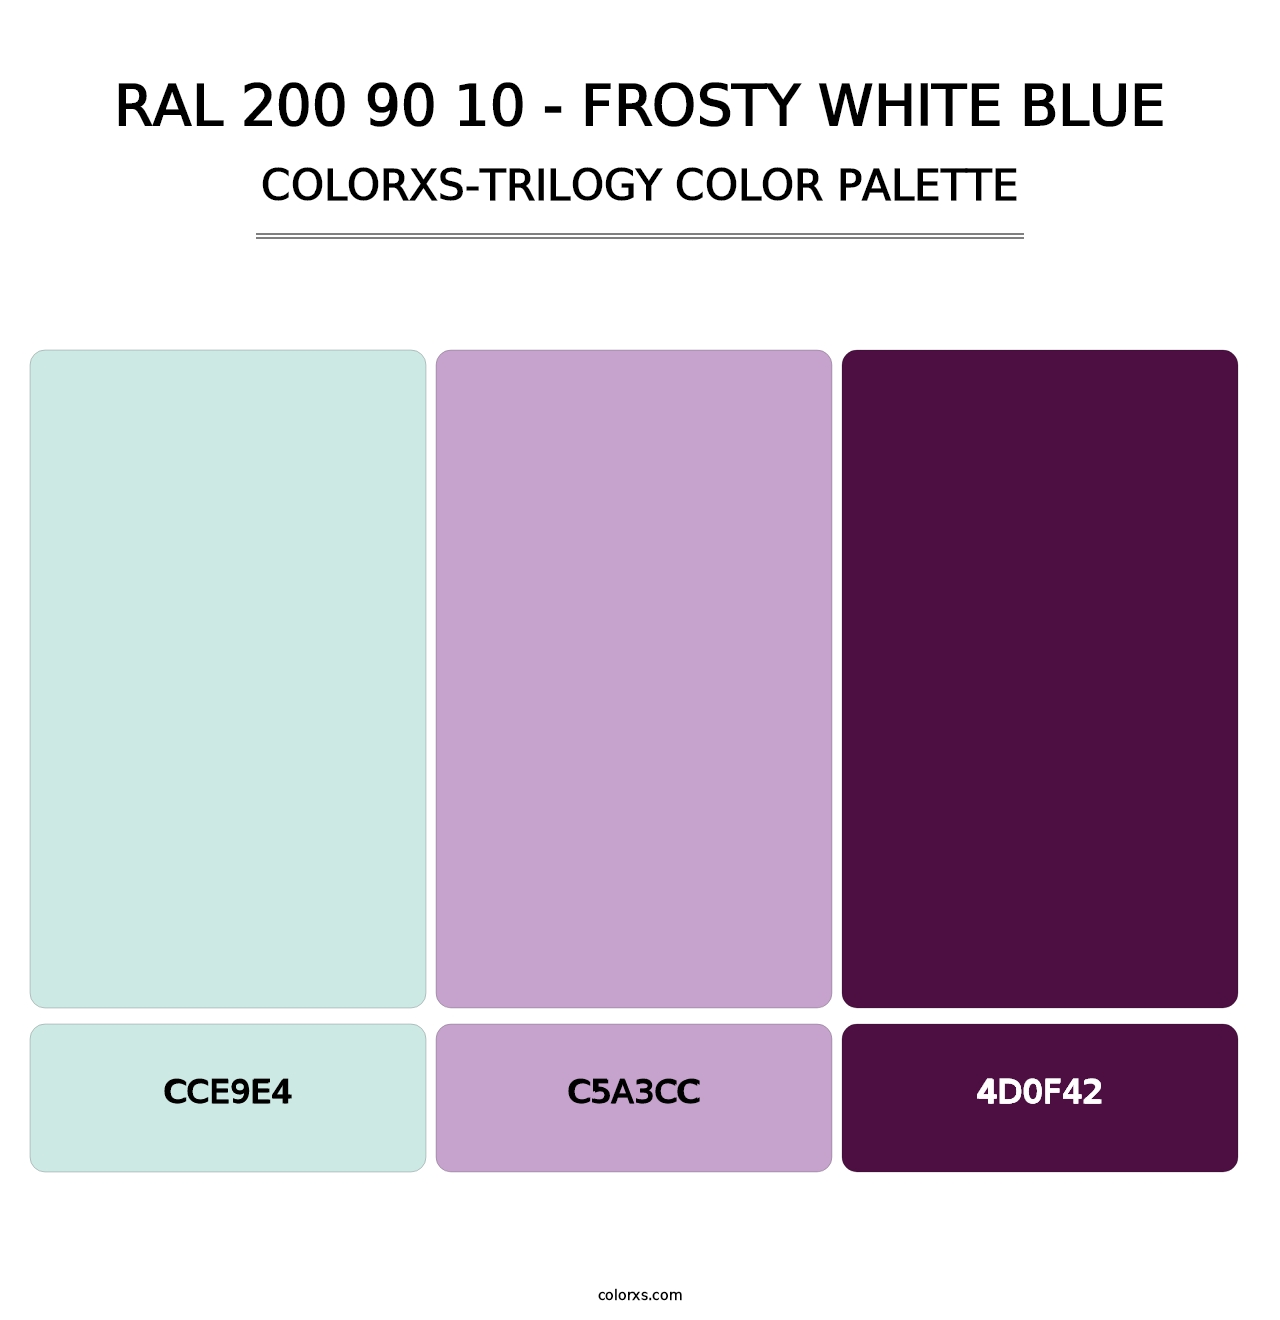 RAL 200 90 10 - Frosty White Blue - Colorxs Trilogy Palette